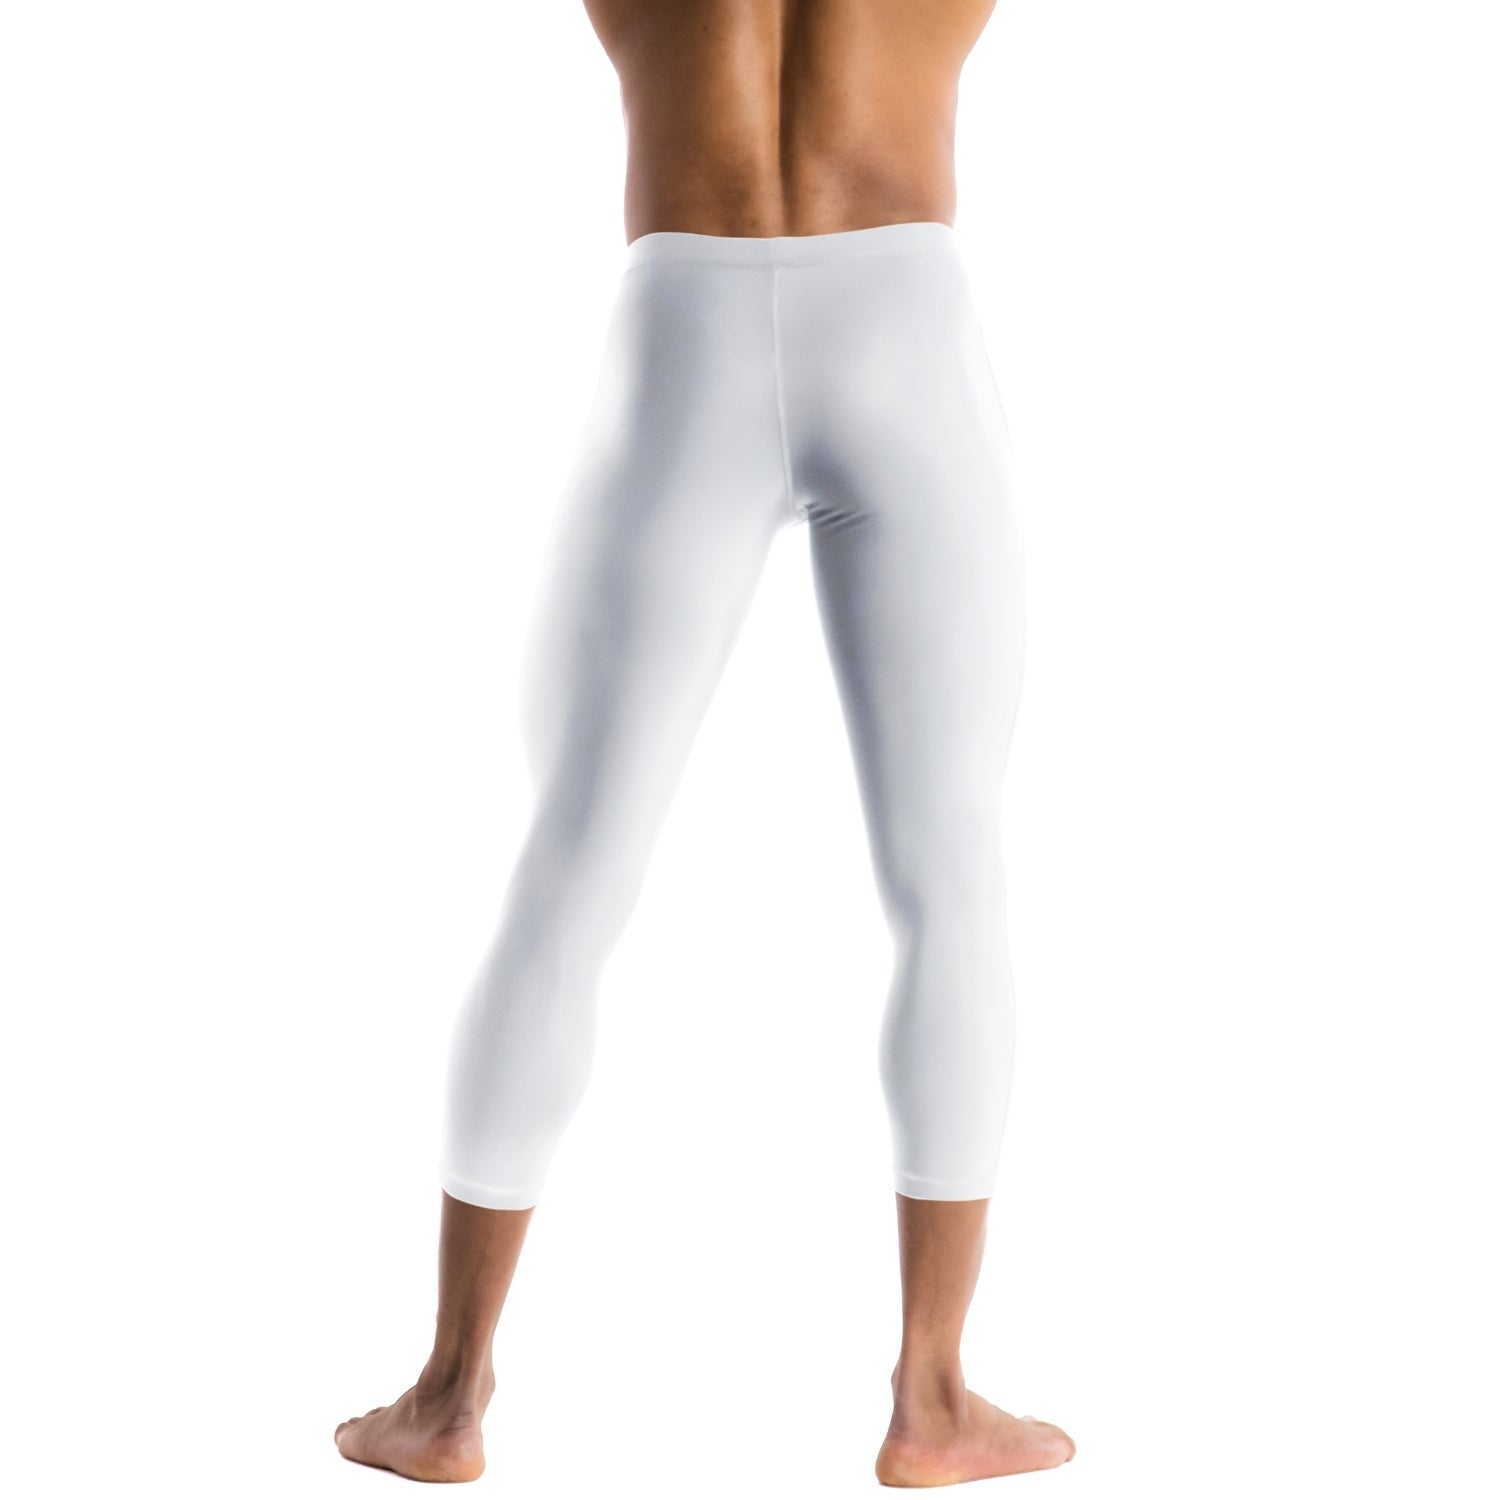 Men's Compression Pants - White Men's Capri